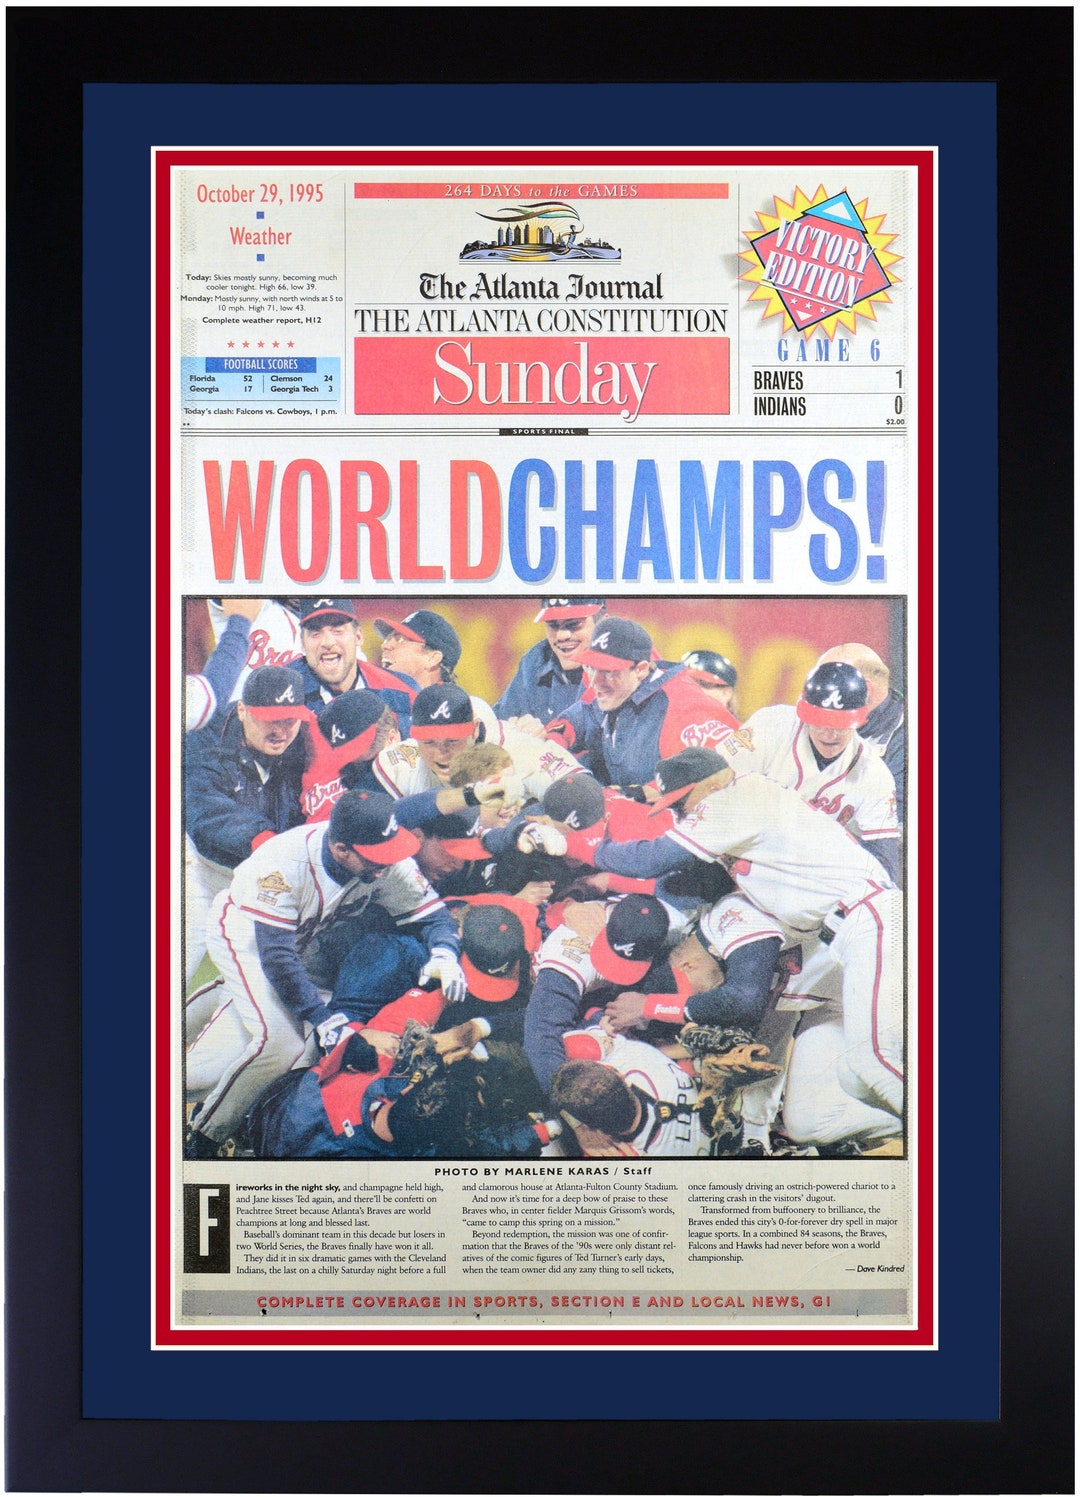 Sold at Auction: 1995 Atlanta Braves World Champion Photo File and